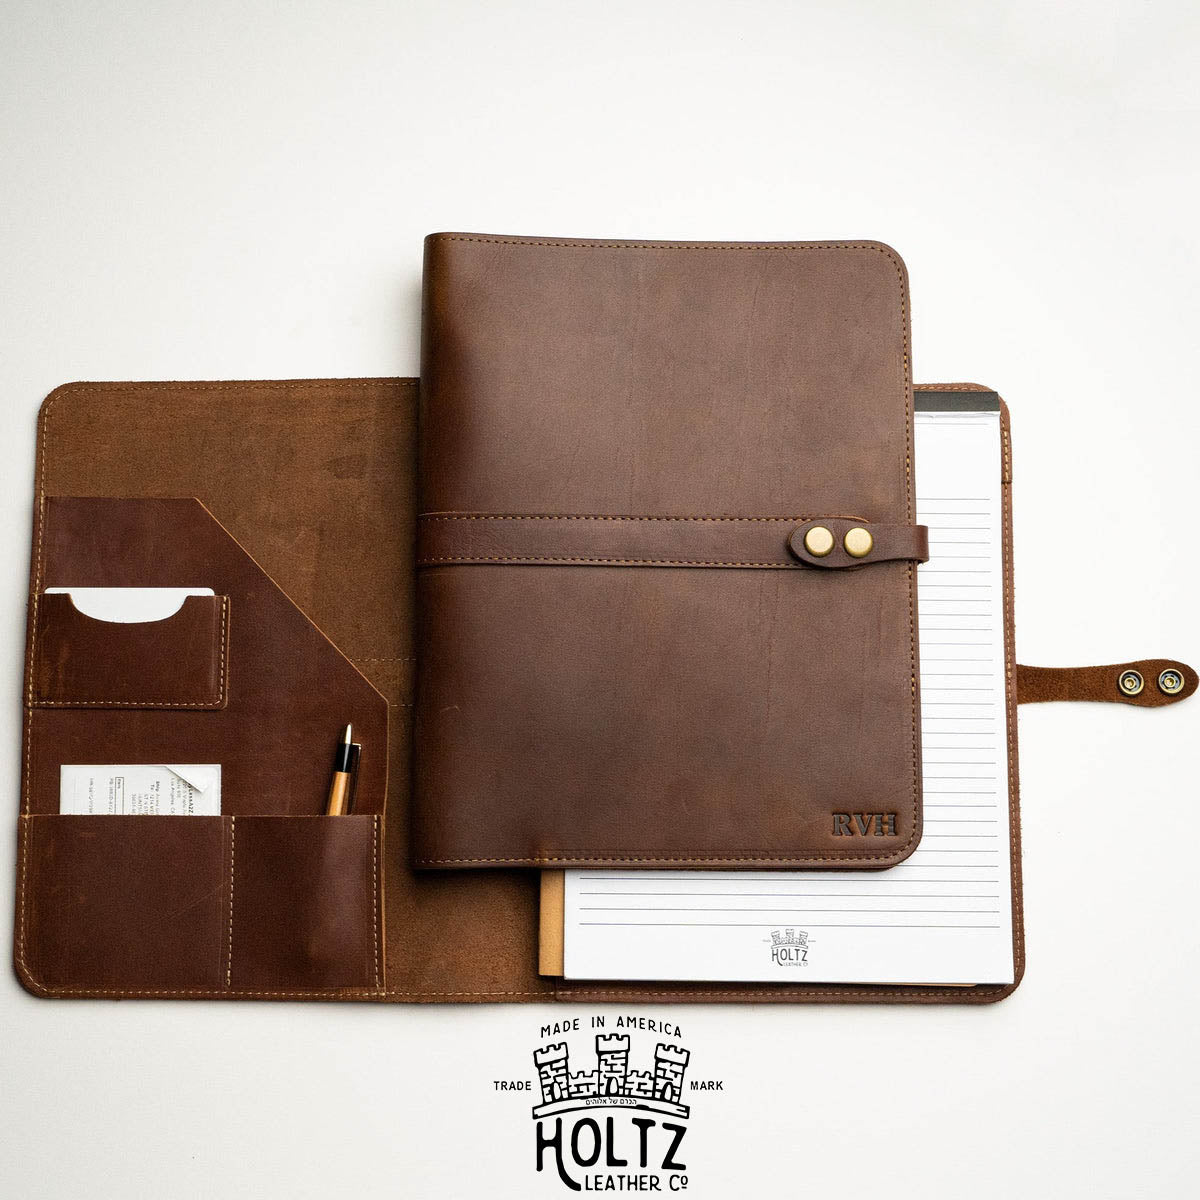 Personalized iPad Leather Padfolio leather Portfolio